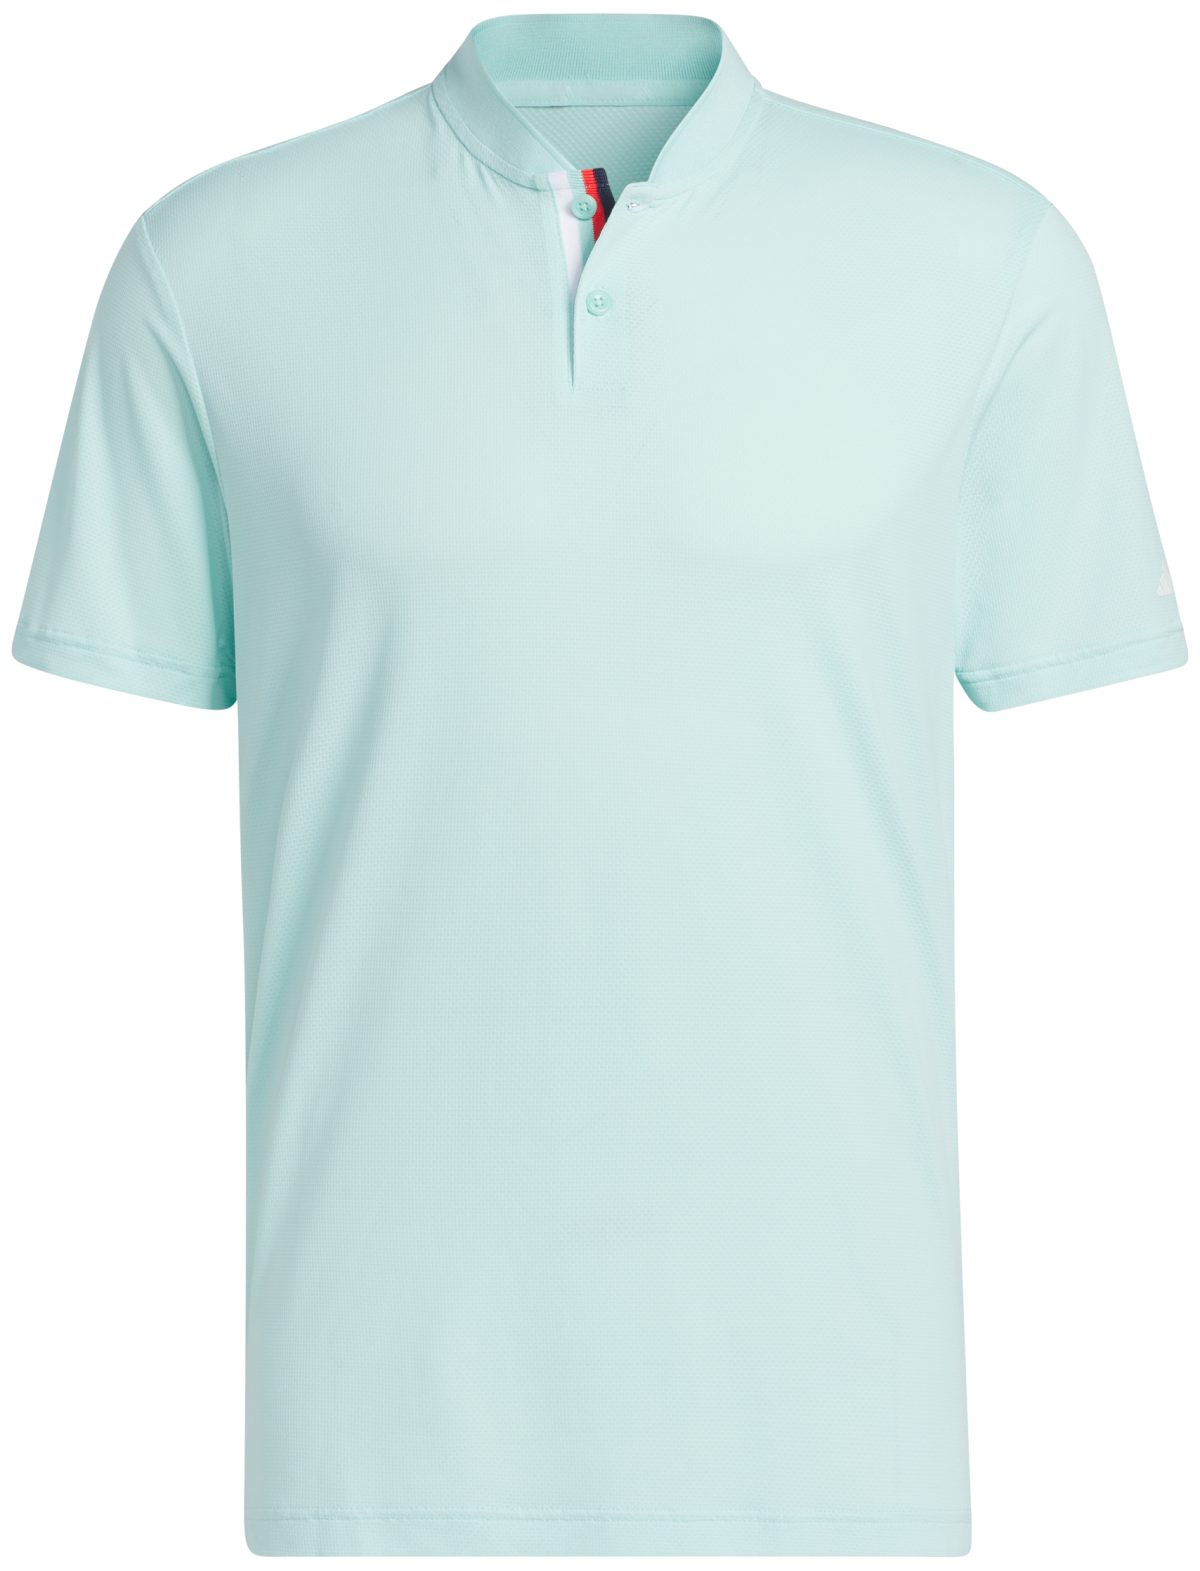 adidas Men's Ultimate365 Tour Golf Polo Shirt, Nylon/Elastane in Semi Flash Aqua, Size M